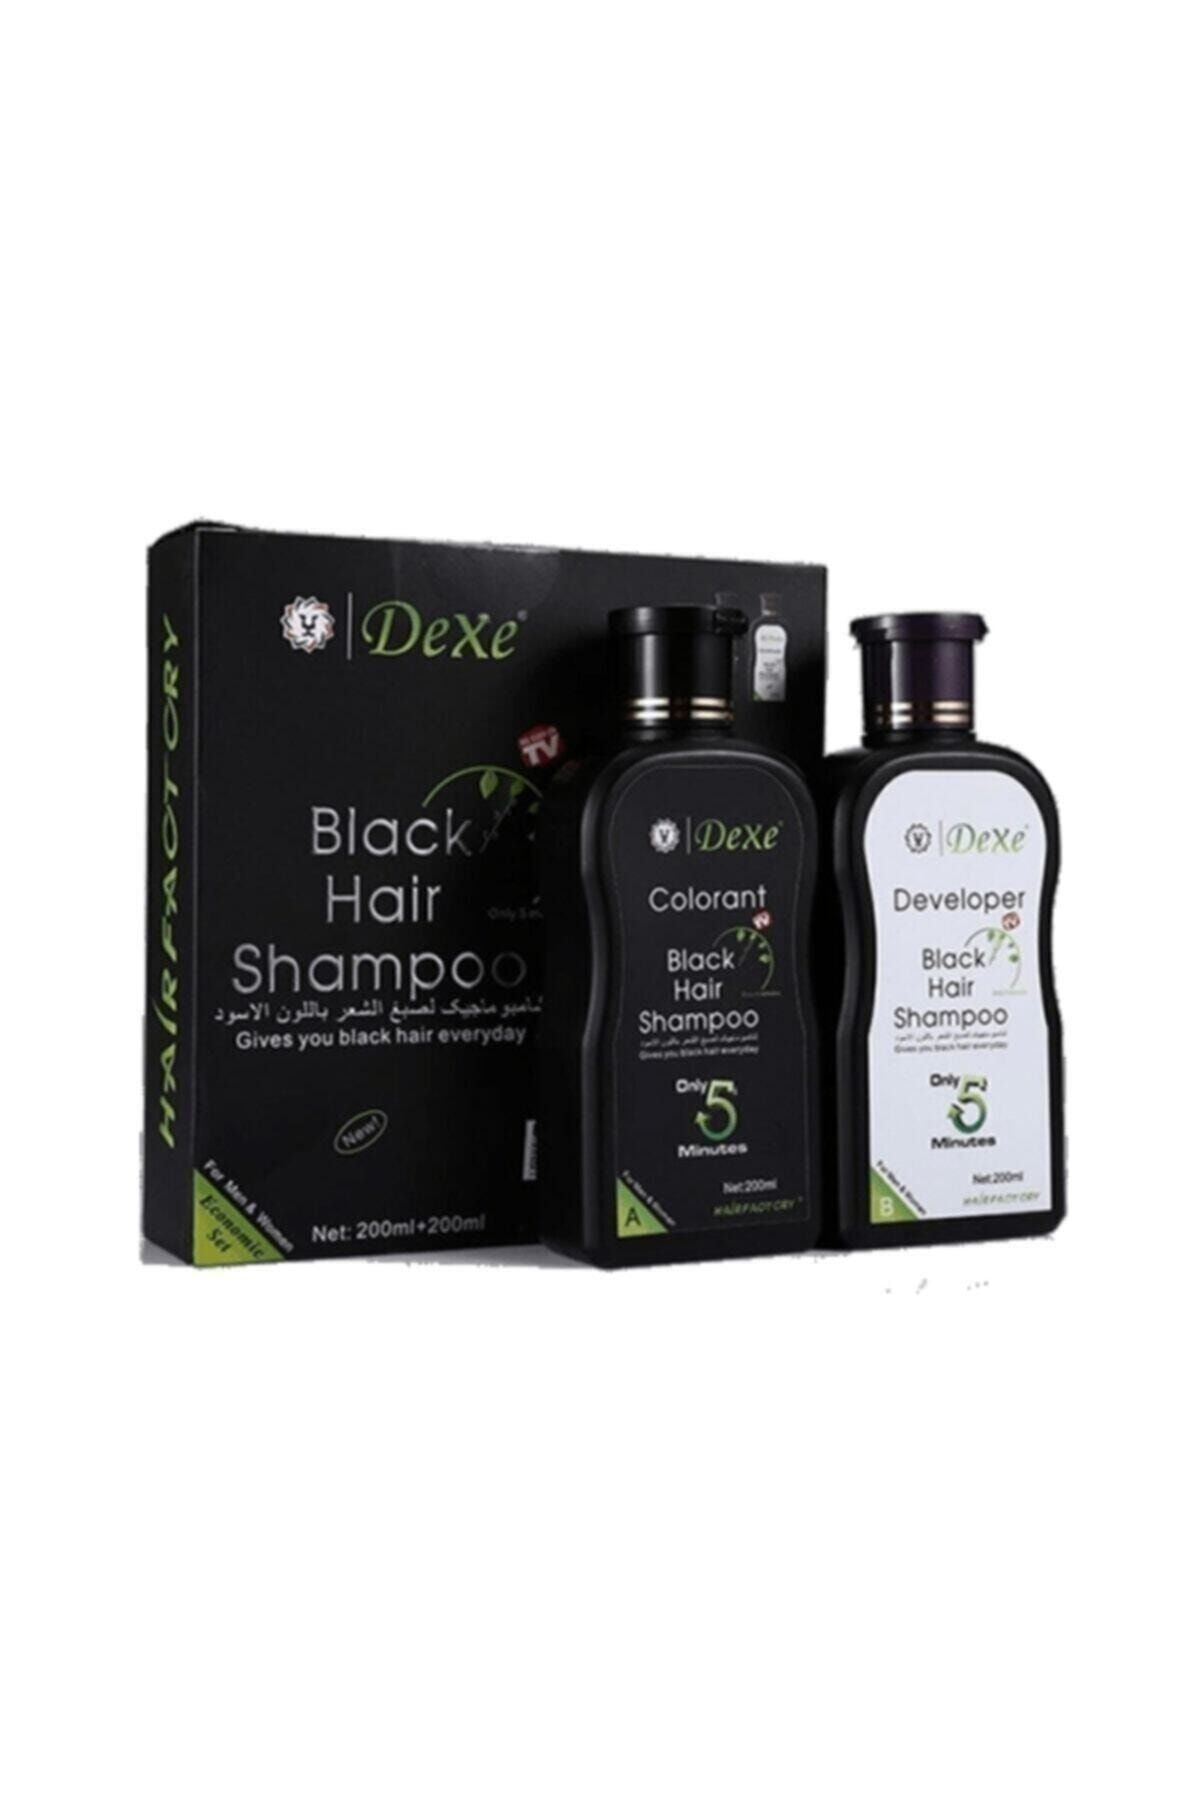 Dexe Beyaz Kapatıcı Siyah Şampuan - Black Hair Shampoo 200ml+200ml